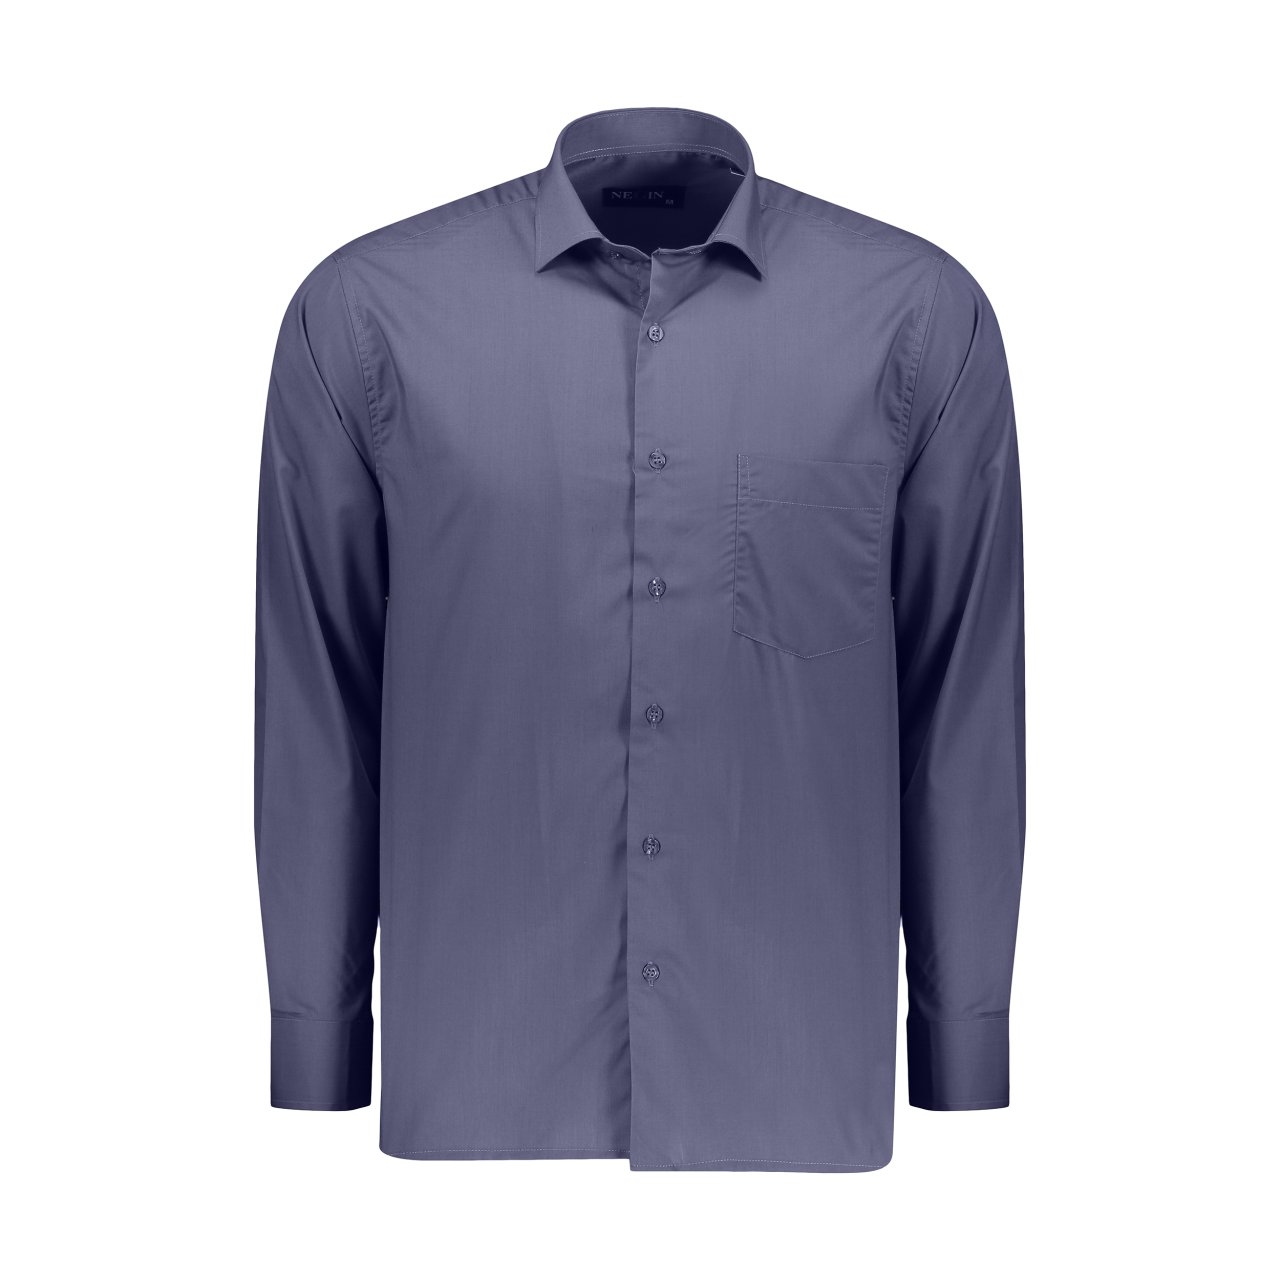 پیراهن مردانه نگین مدل YA-AS کد 4320 رنگ آبی